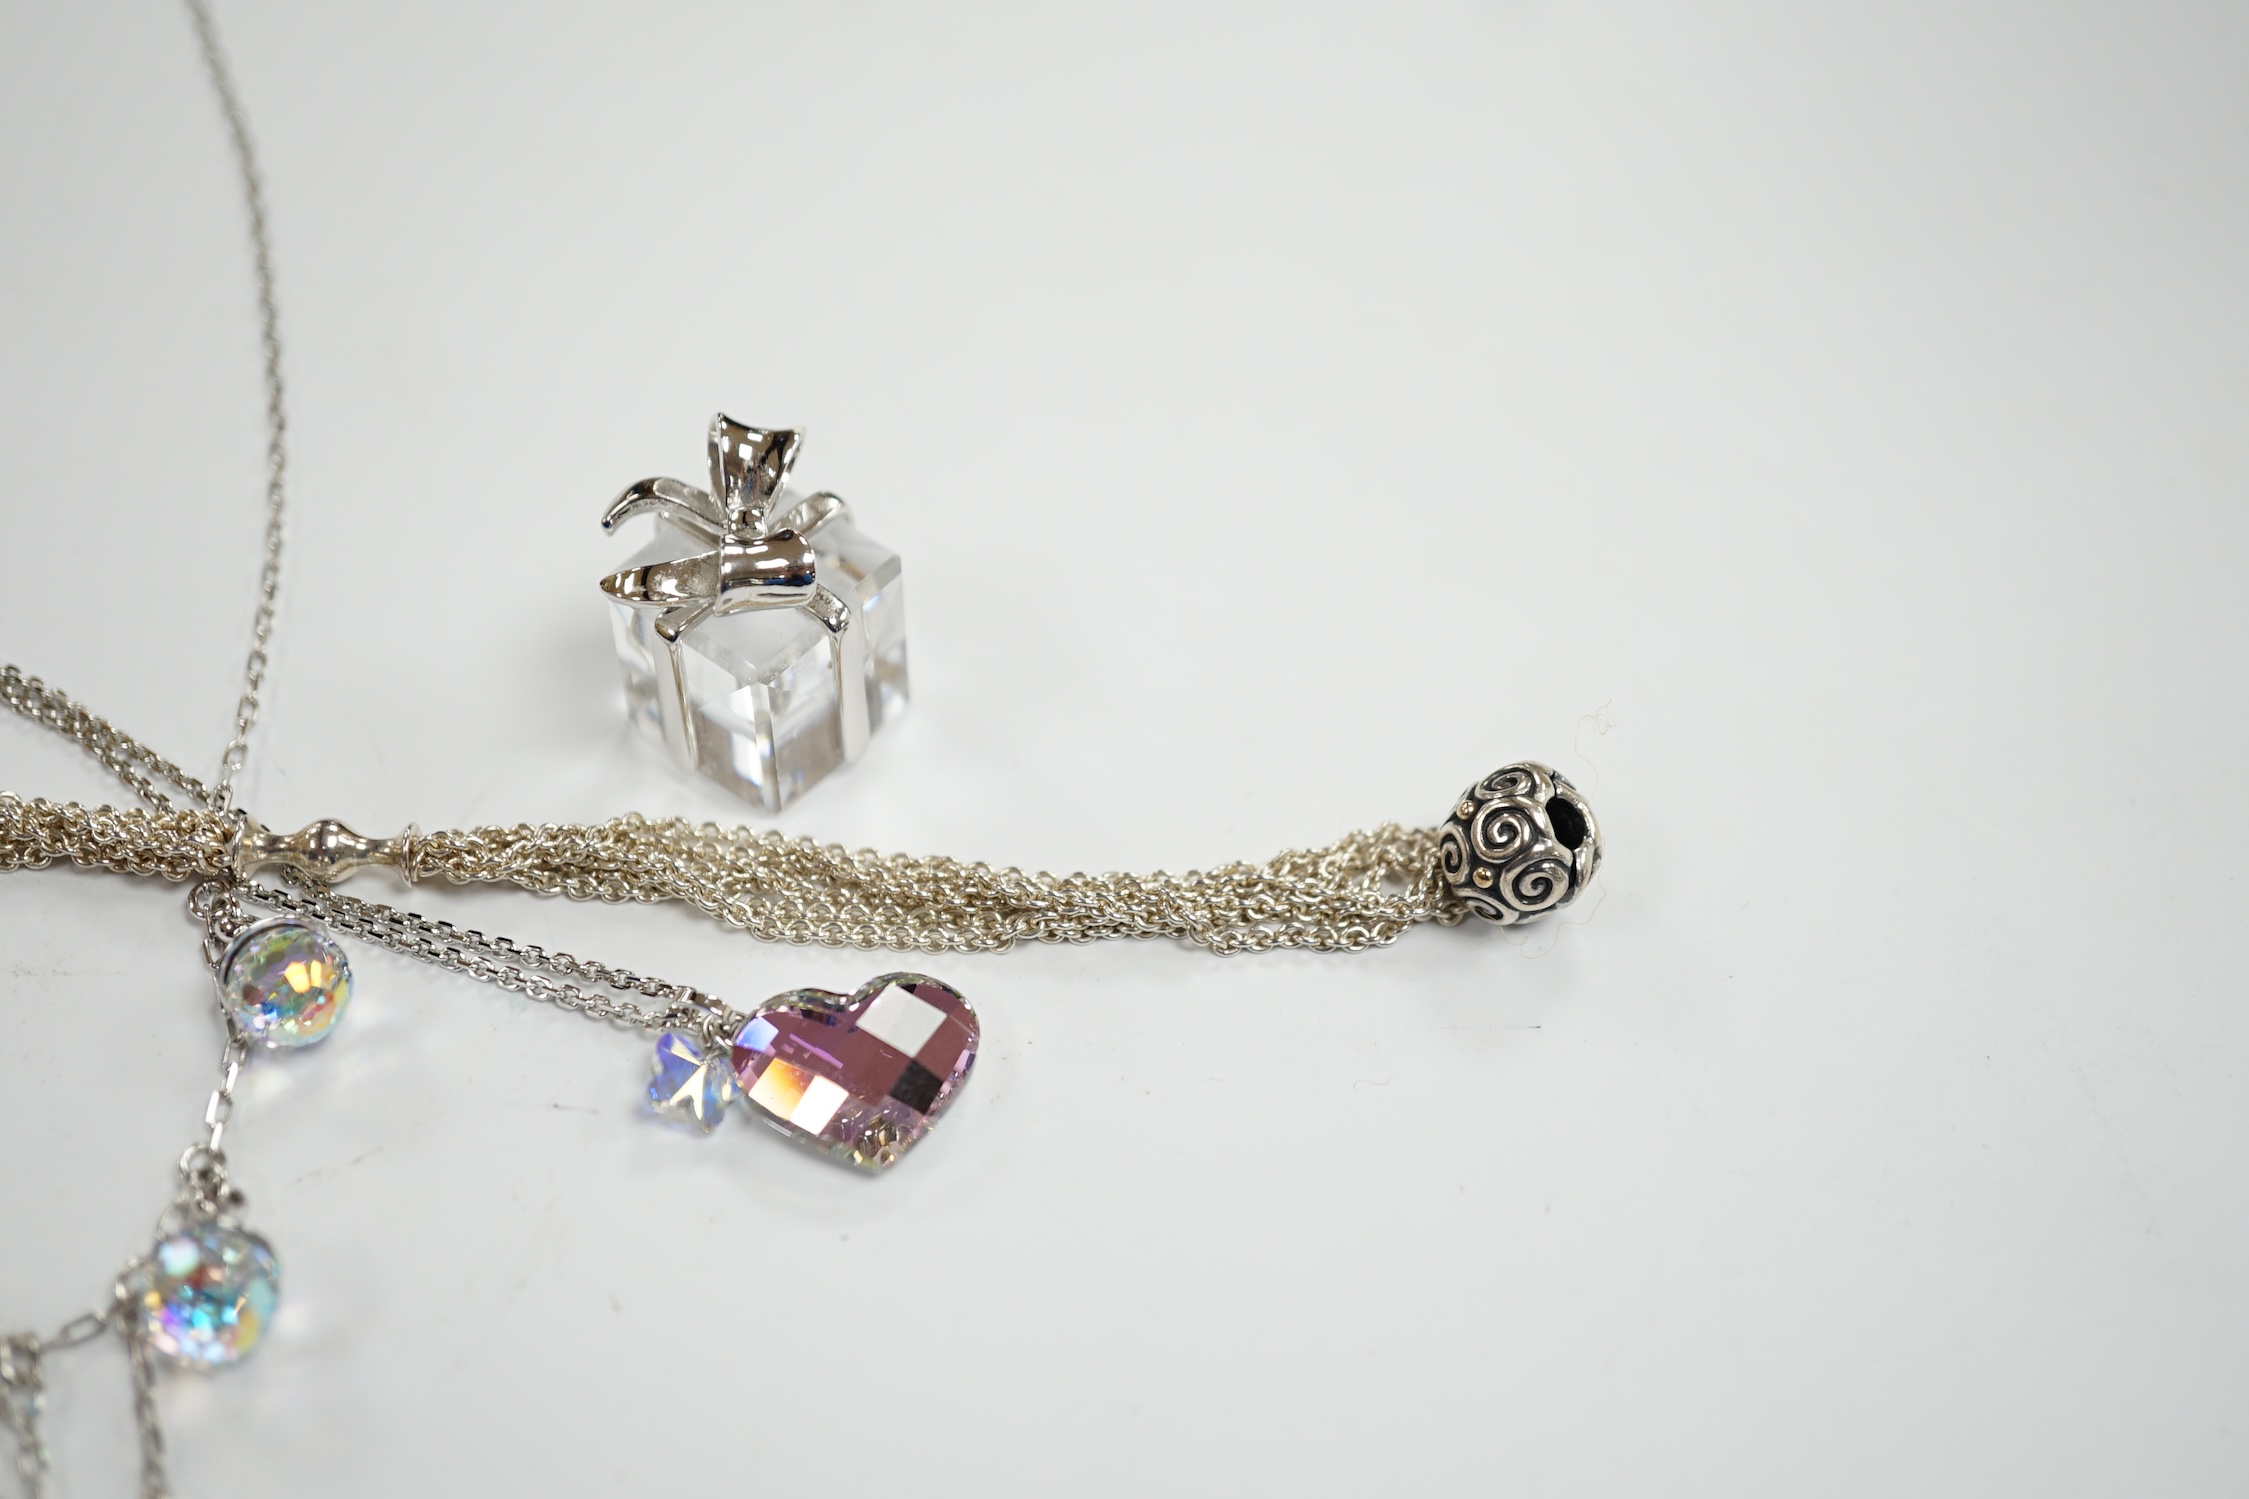 Two modern Swarovski crystal necklaces, a similar 'present' charm and a Pandora bracelet.